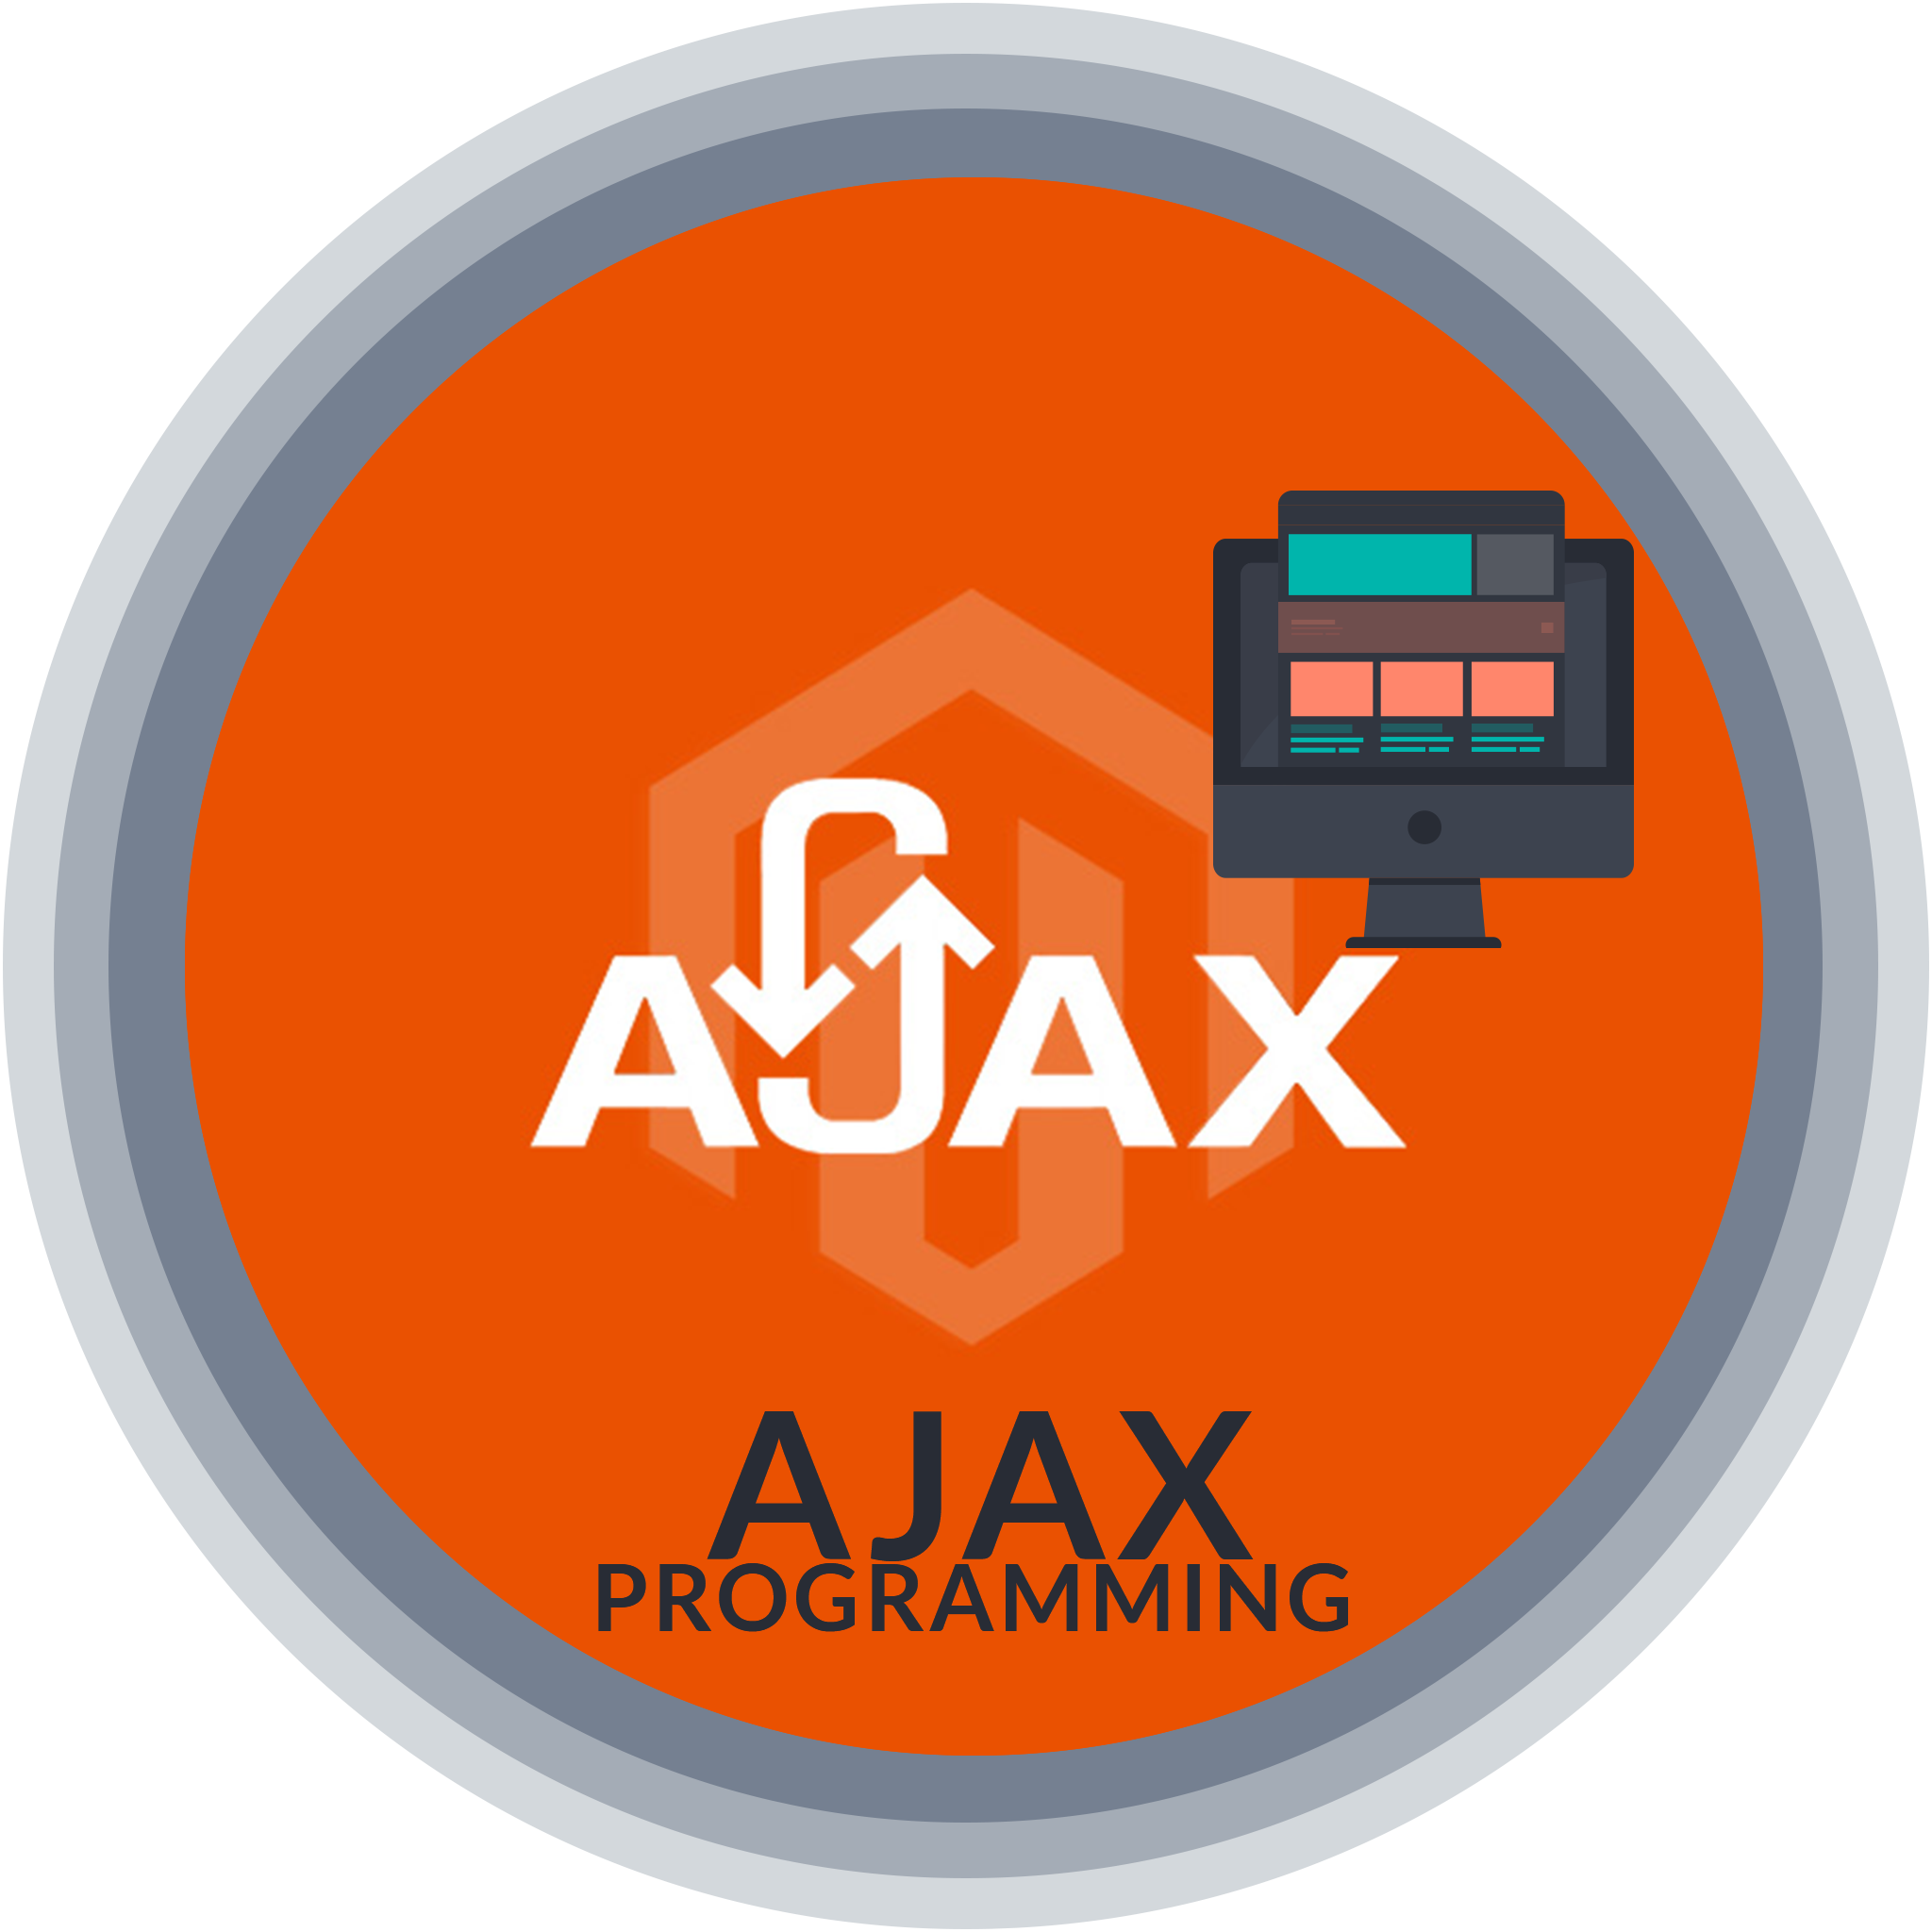 Download PNG image - Ajax PNG HD 